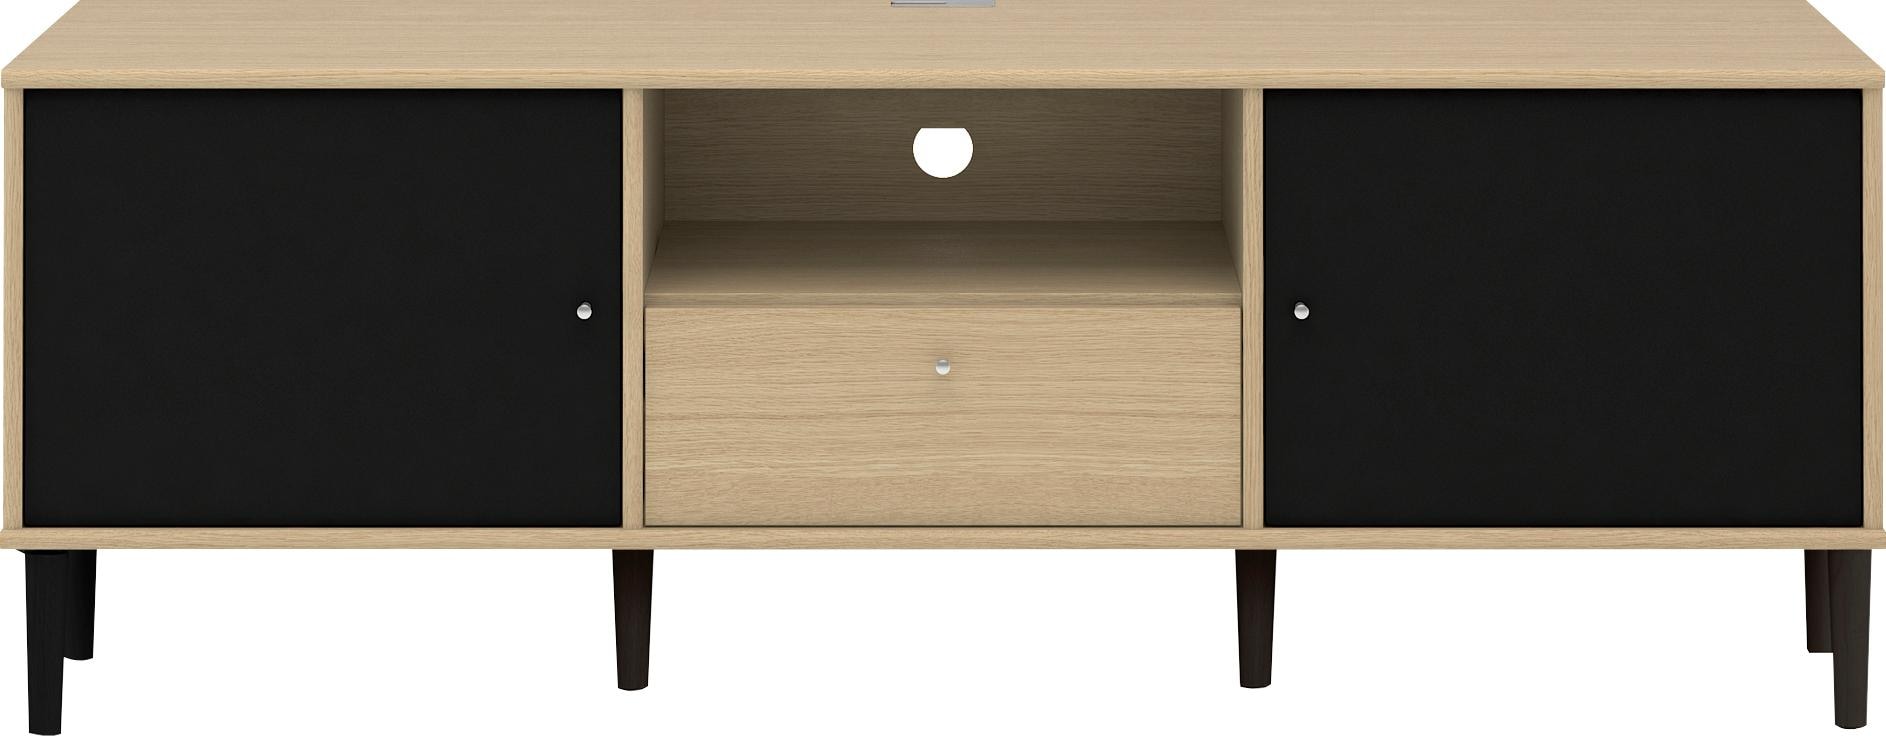 Möbel BAUR Möbelfuß flexible der | Mistral, die Hammel Serie für »Mistral«, Furniture Möbelserie